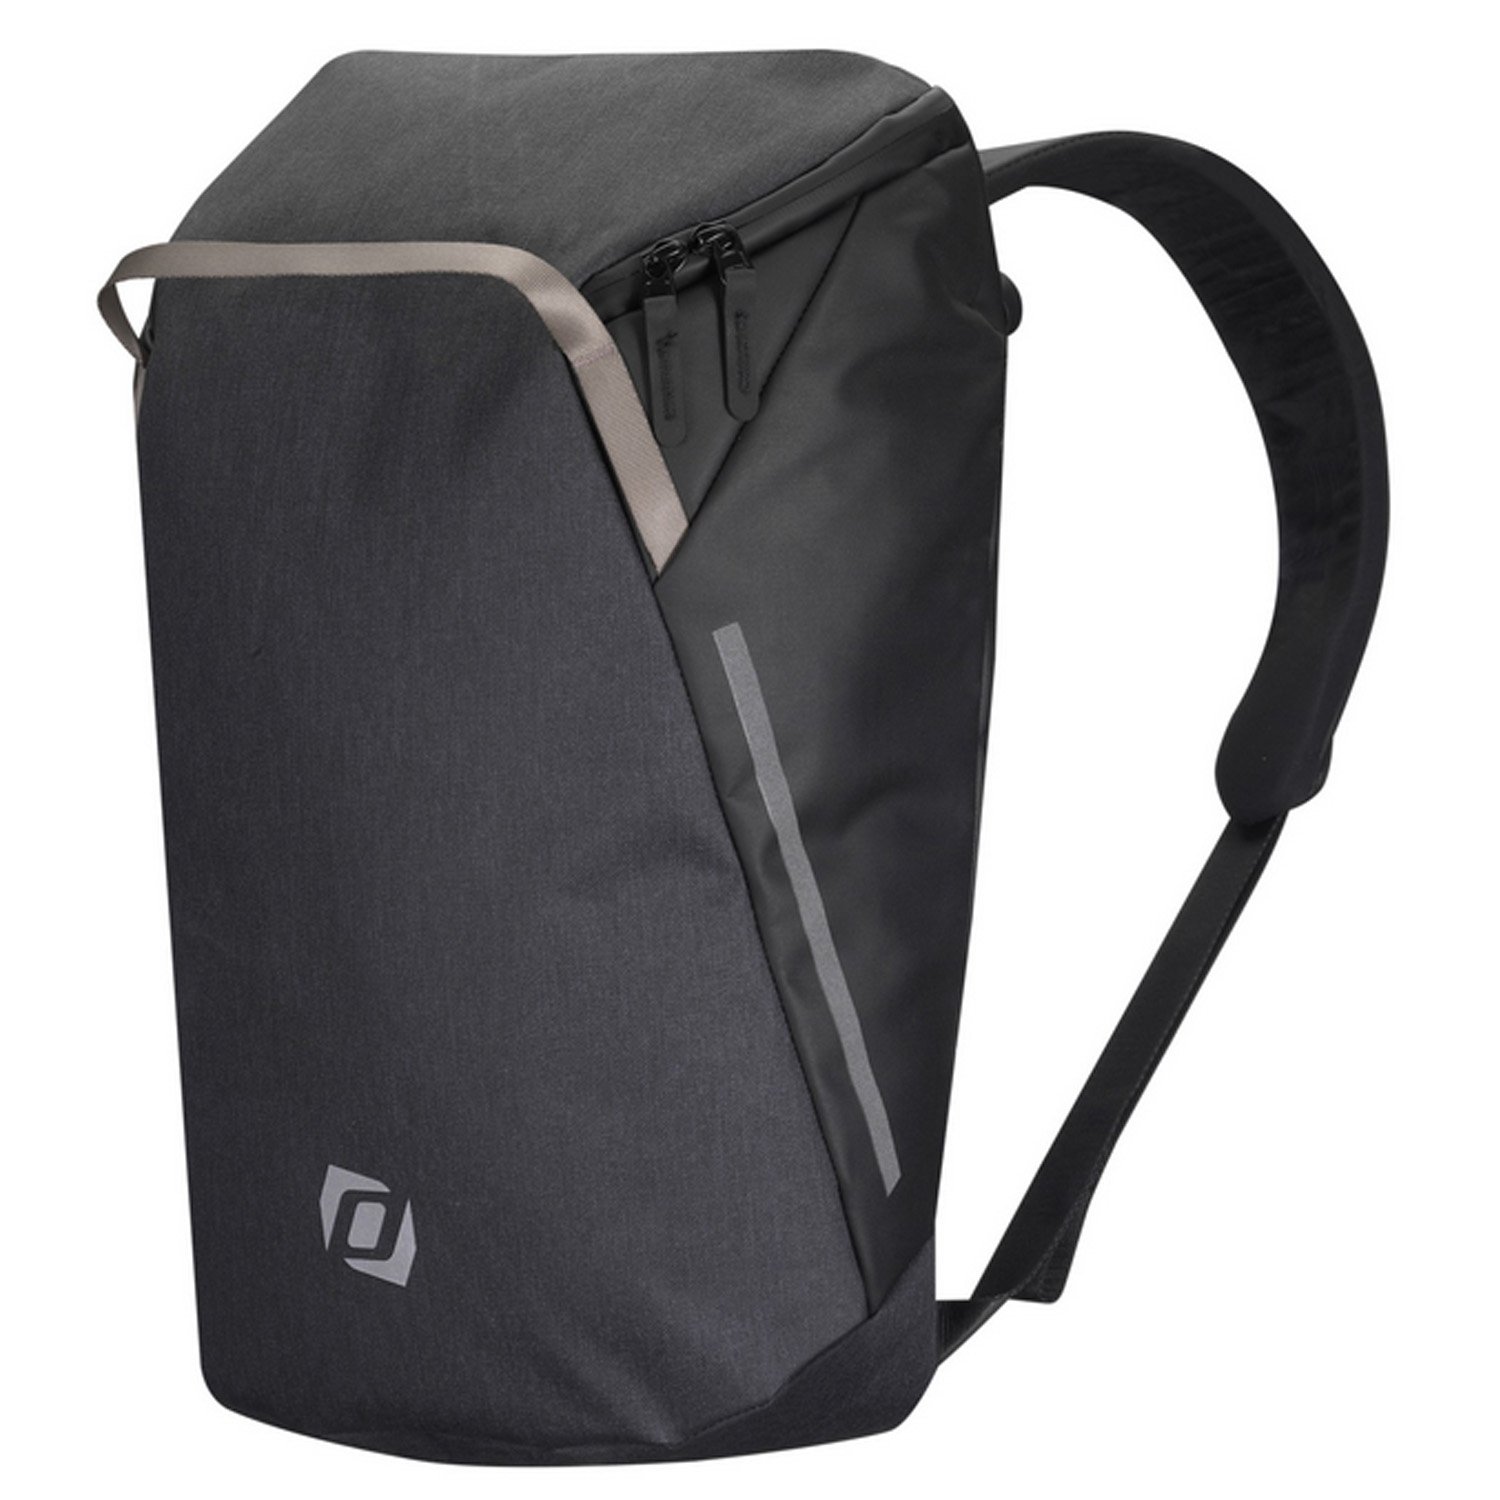 Велосумка Syncros Backpack, для багажника, черный, ES281116-0001 сумка велосипедная syncros pannier bag для багажника black es281115 0001